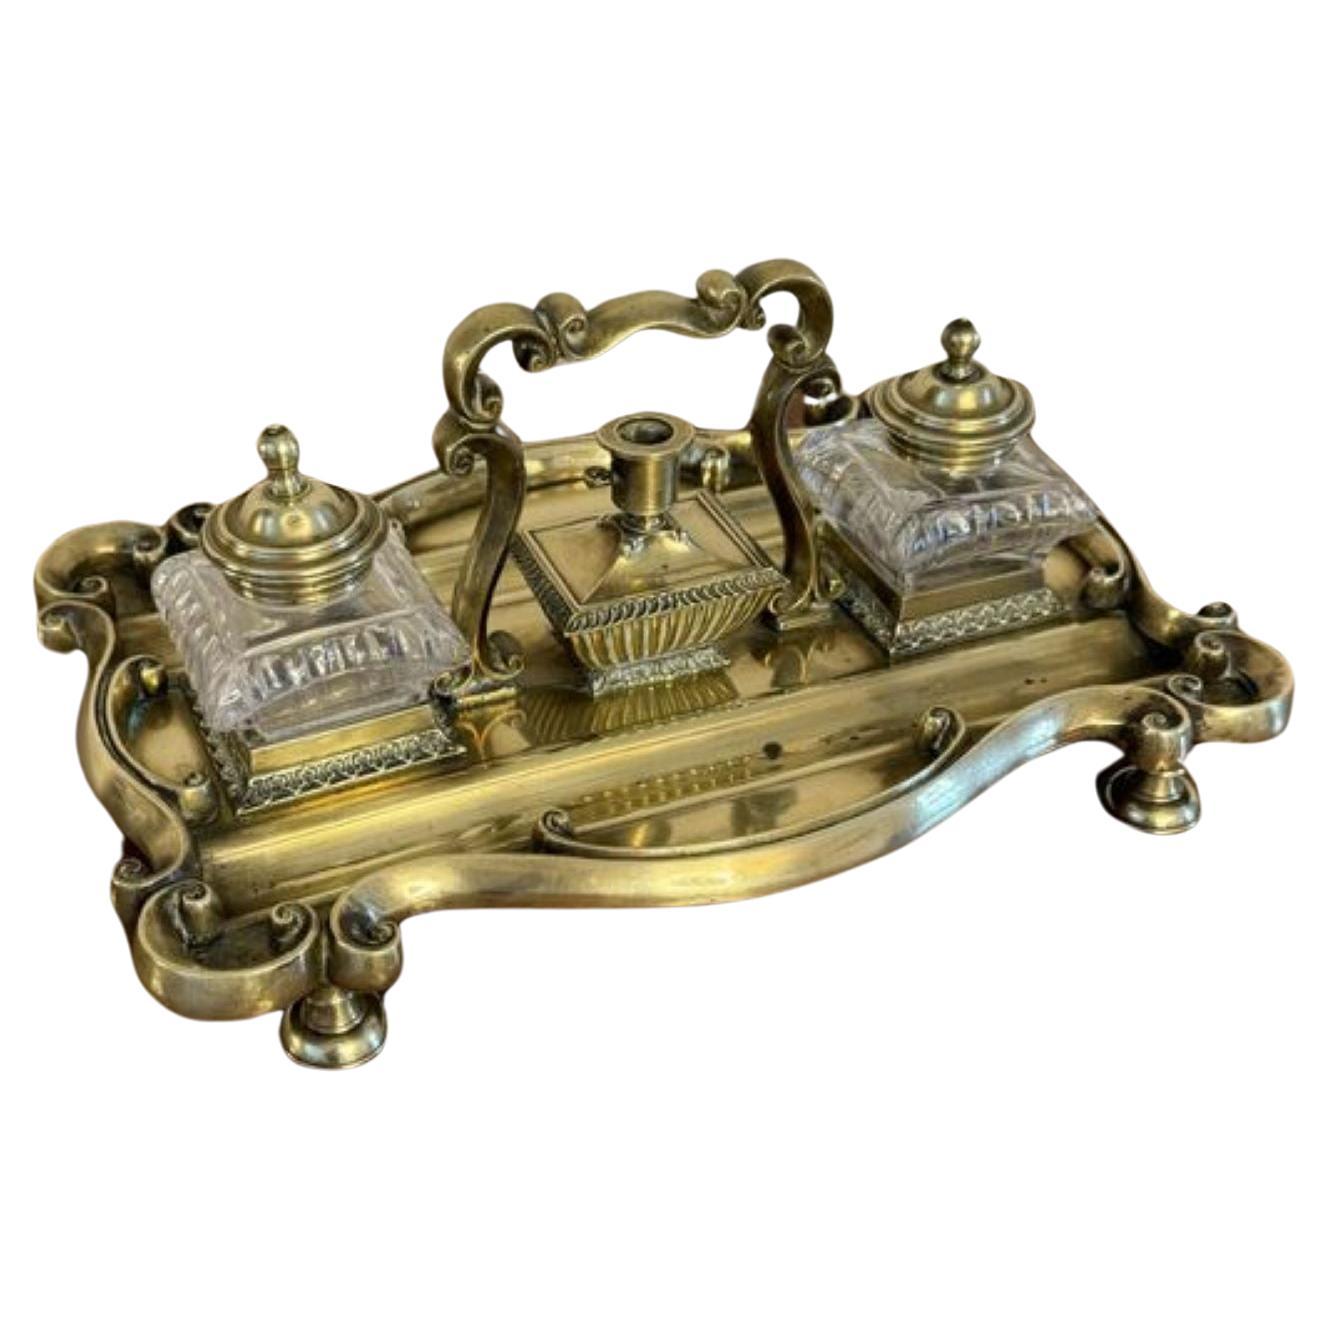 Stunning quality antique Victorian brass desk set